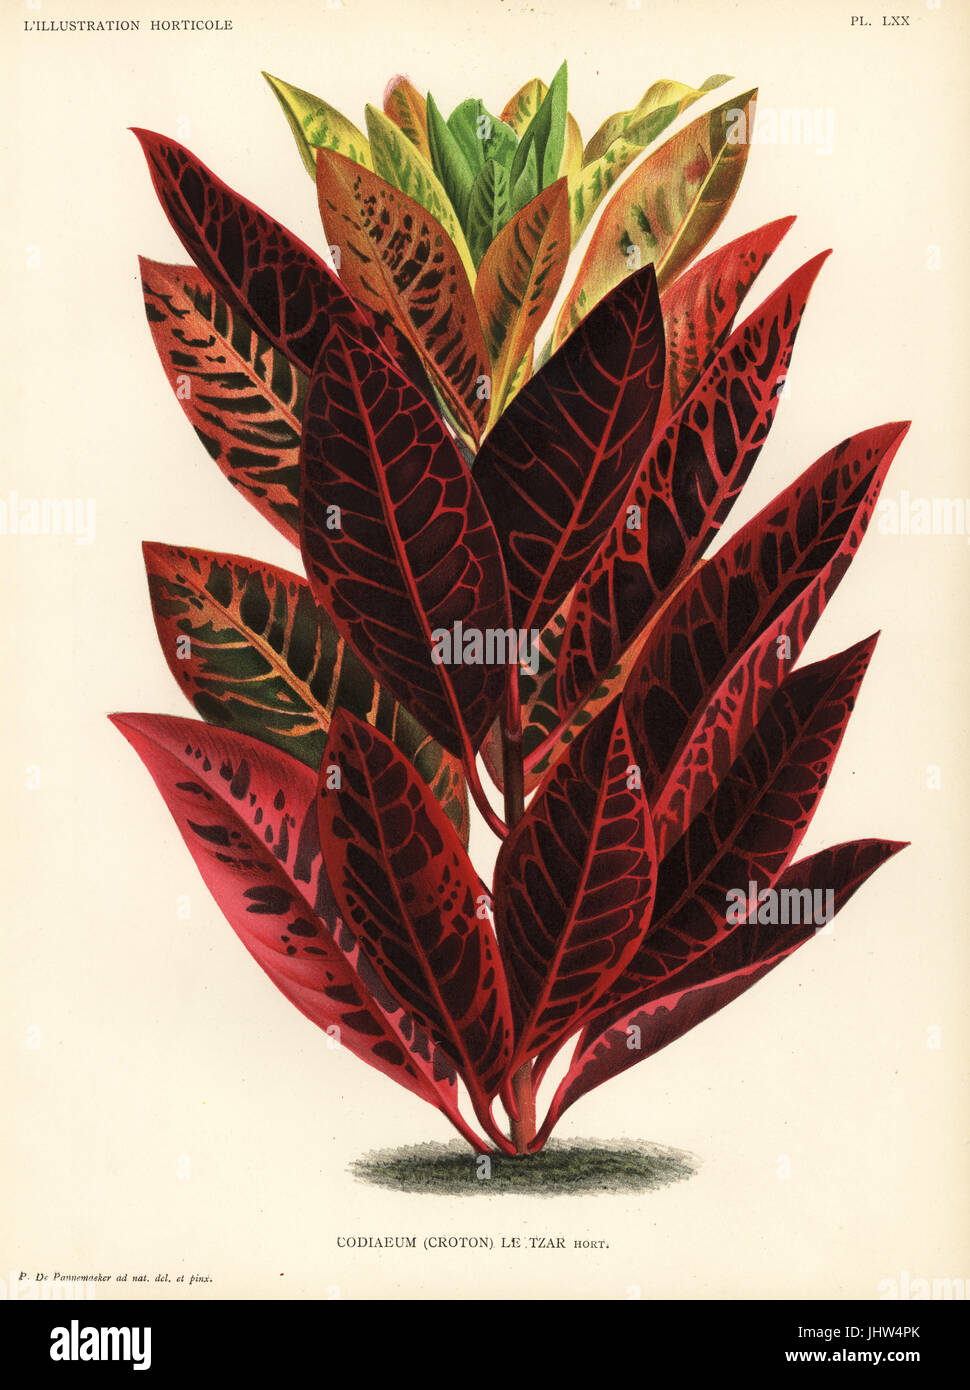 Codiaeum hybrid, le Tzar, Codiaeum variegatum. Drawn and chromolithographed by Pieter de Pannemaeker from Jean Linden's l'Illustration Horticole, Brussels, 1888. Stock Photo